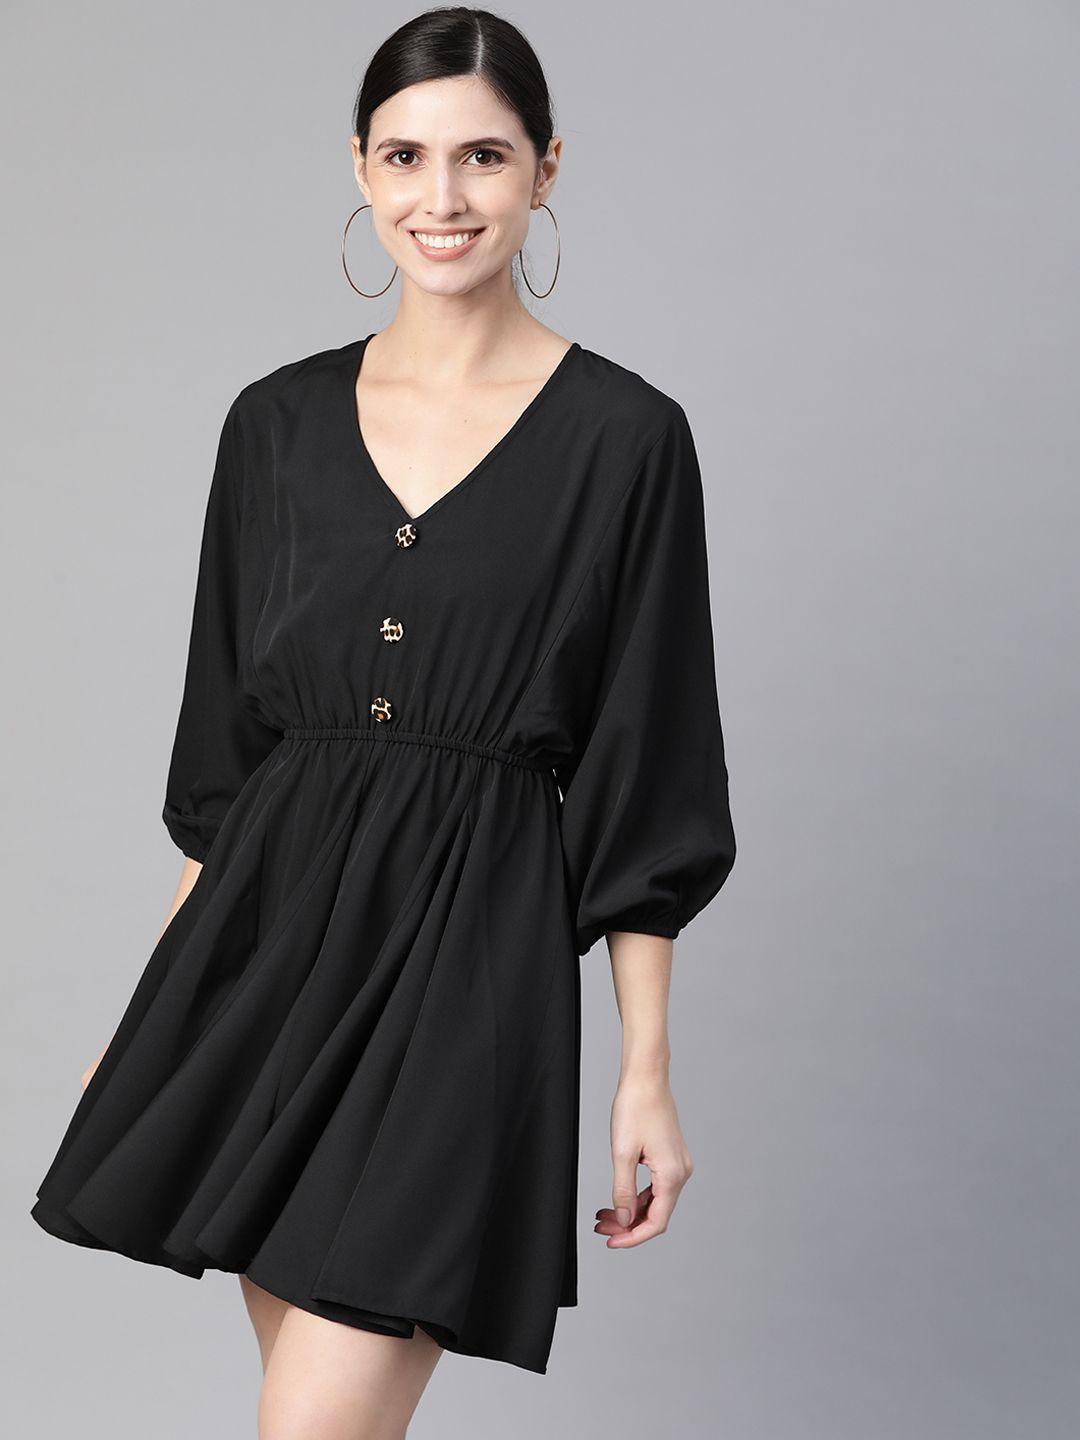 kassually women black solid fit & flare dress